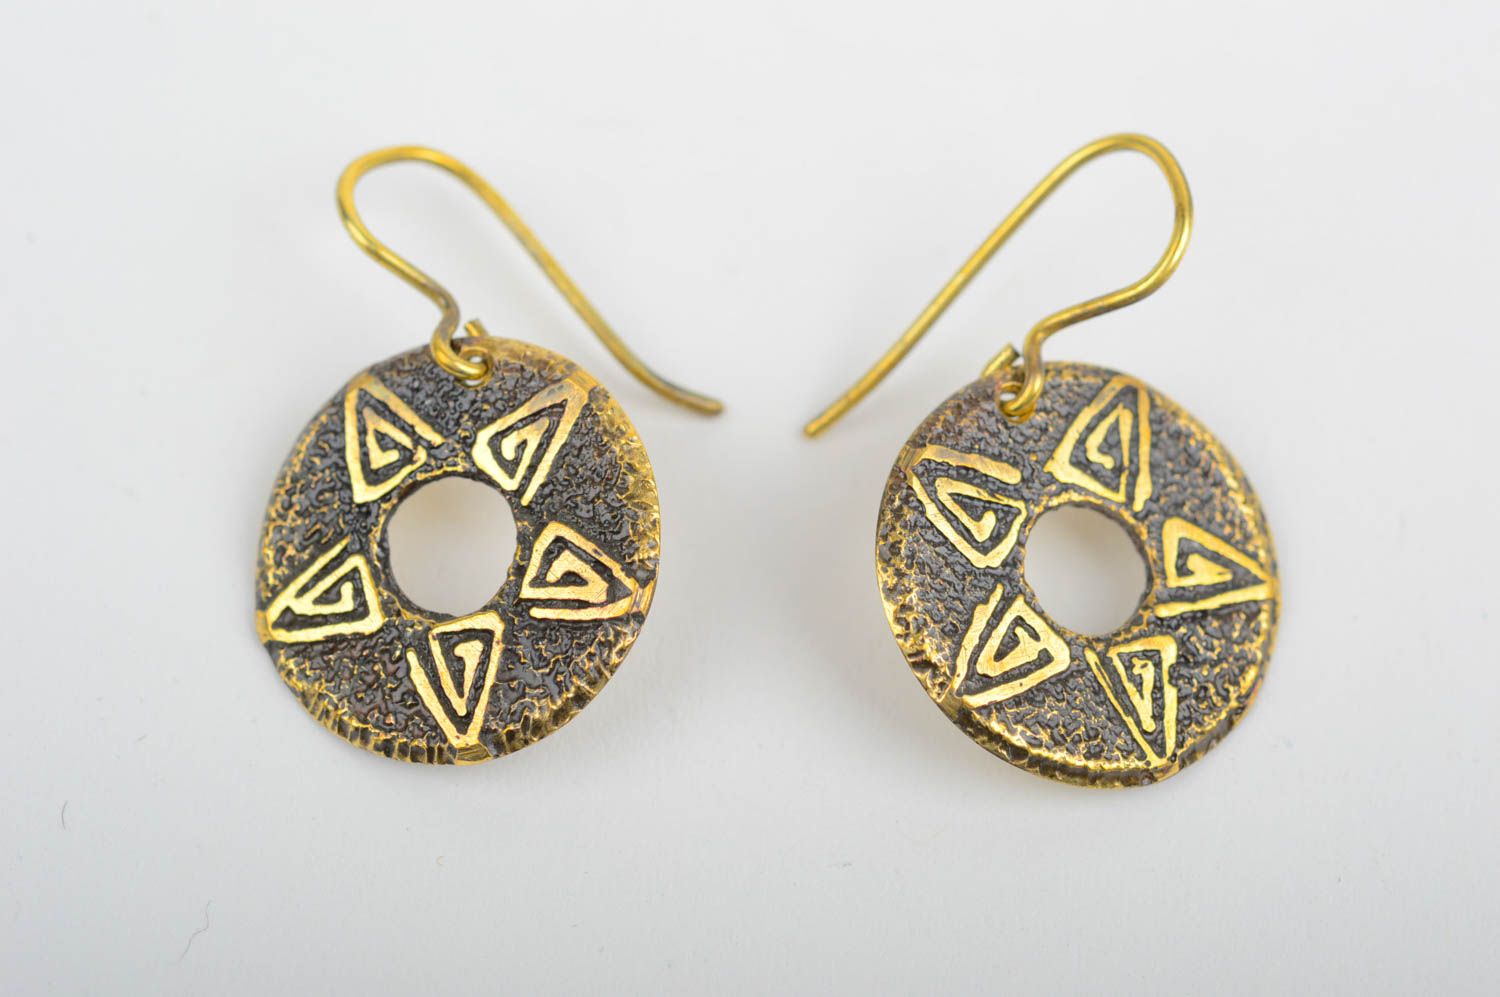 Handmade metal earrings unusual cute earrings fashion trends gifts for her photo 1